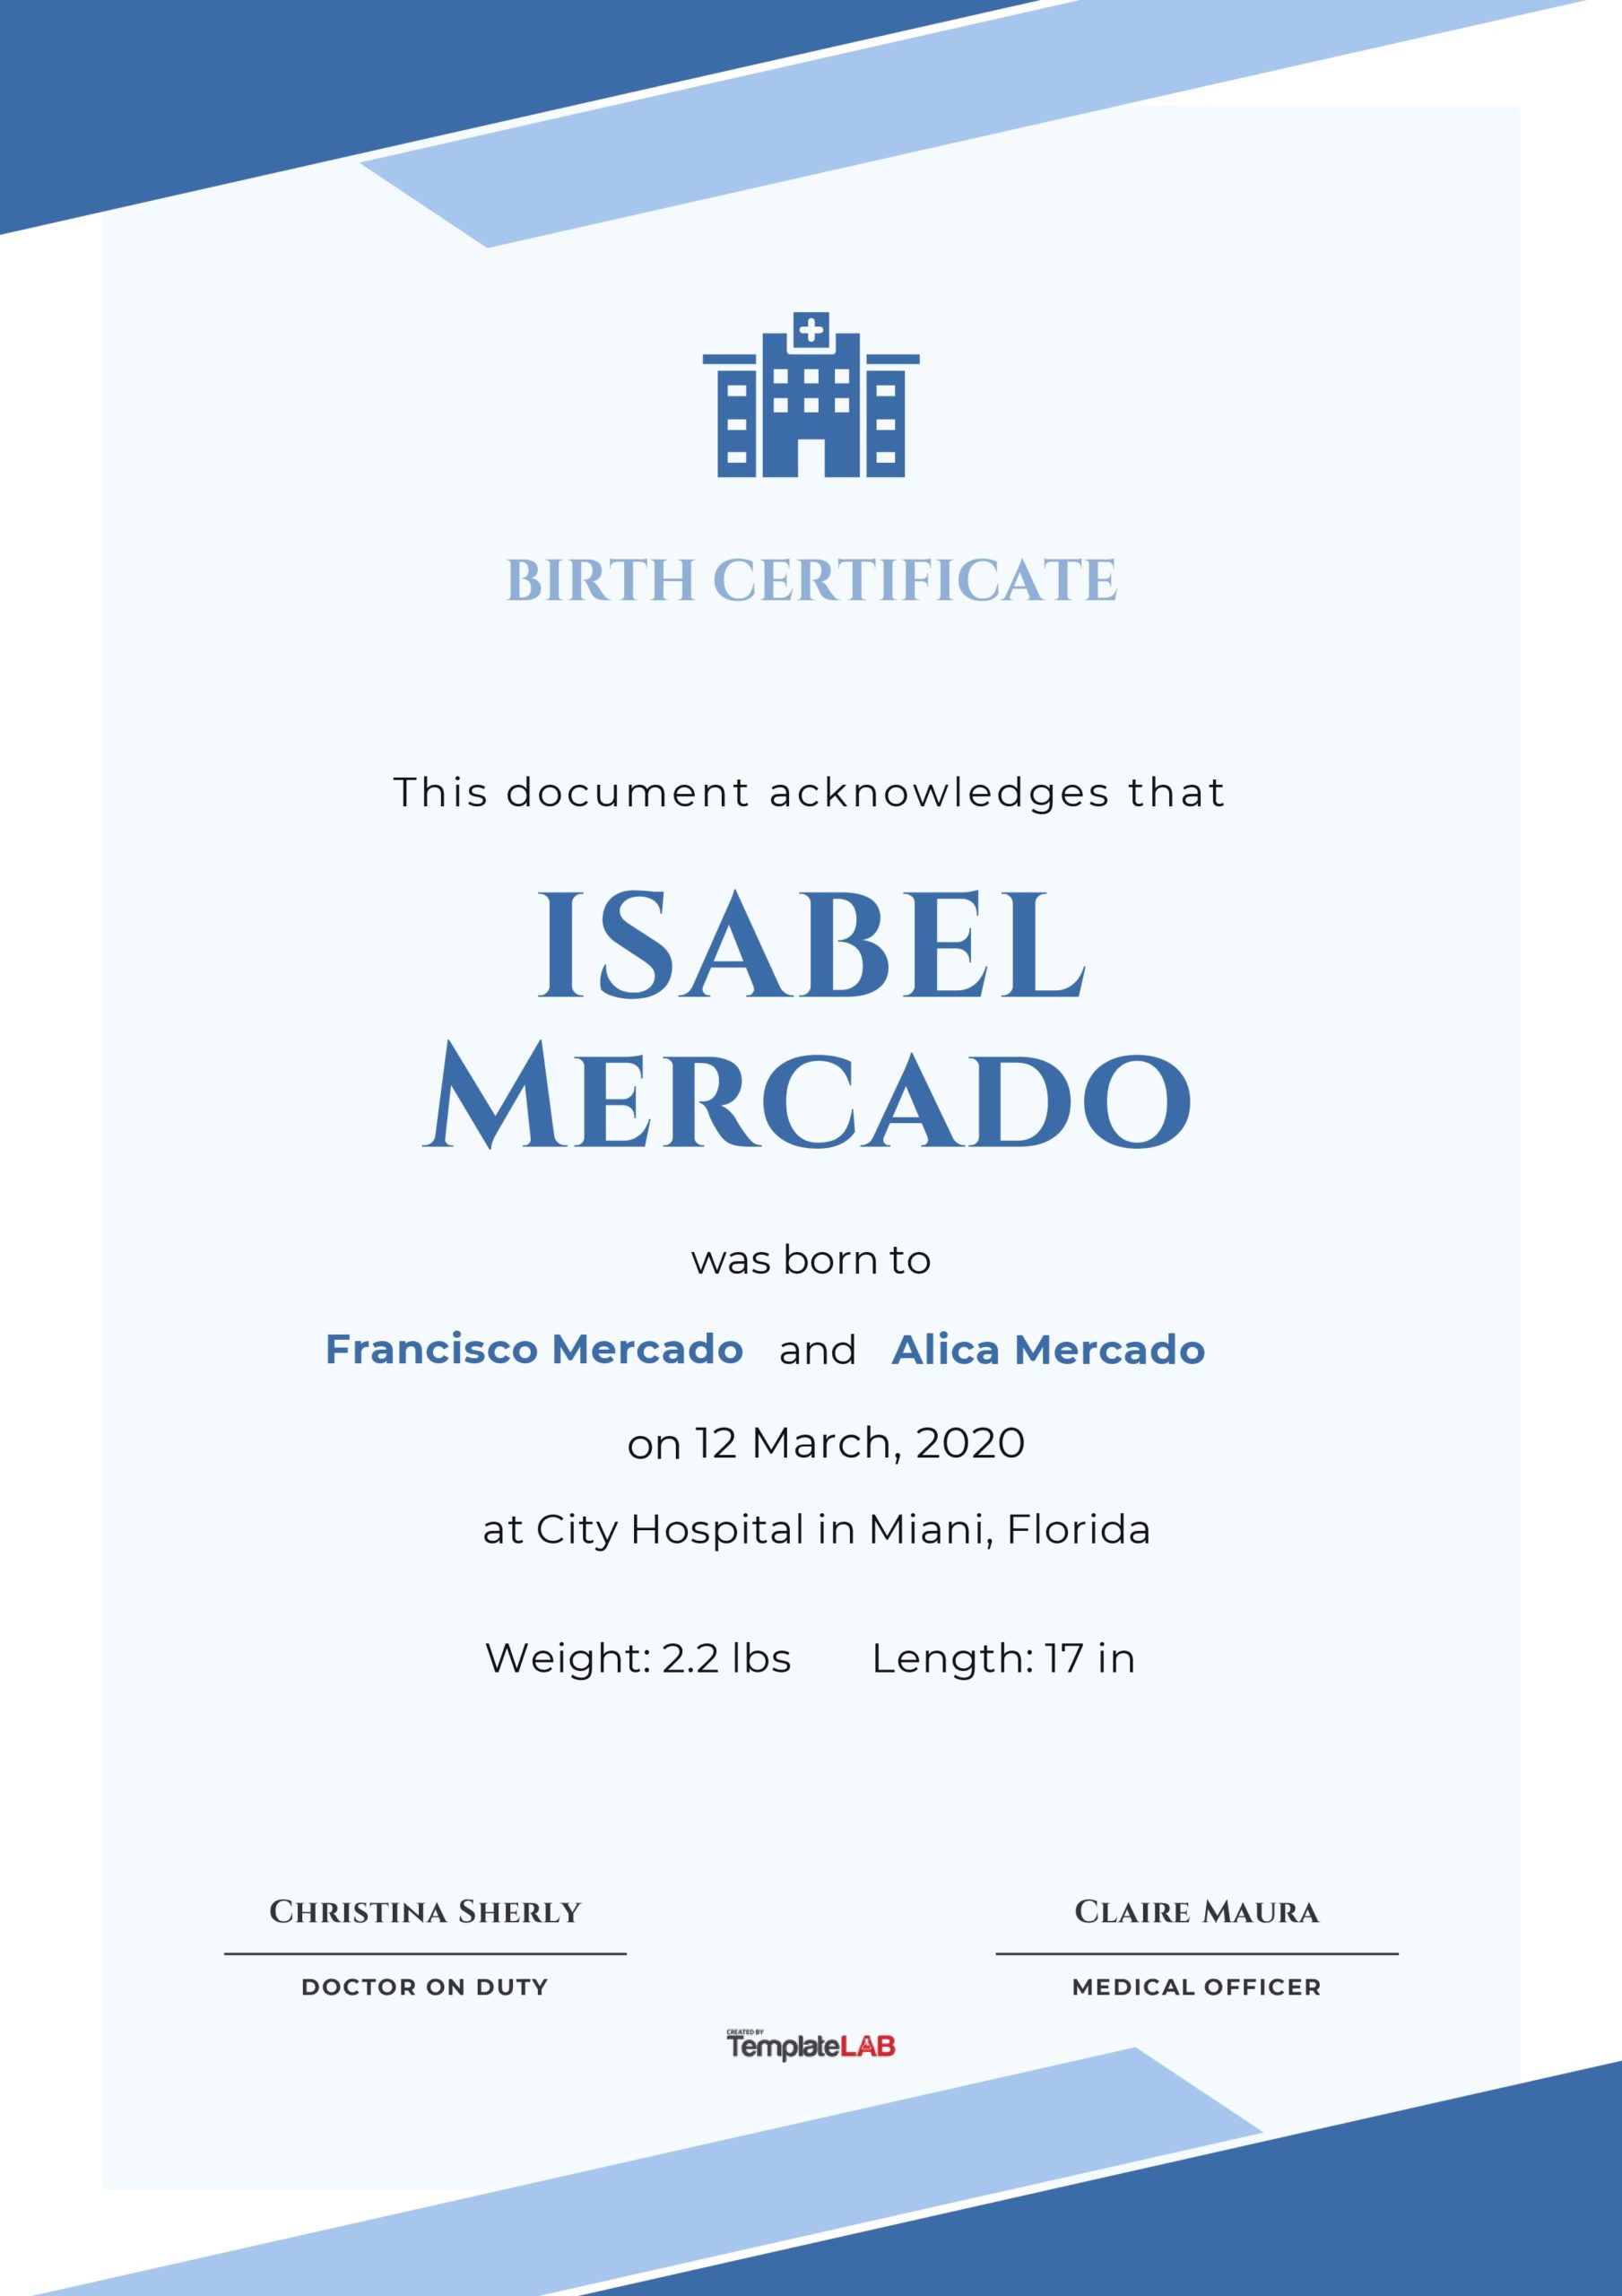 Free Birth Certificate Template 17